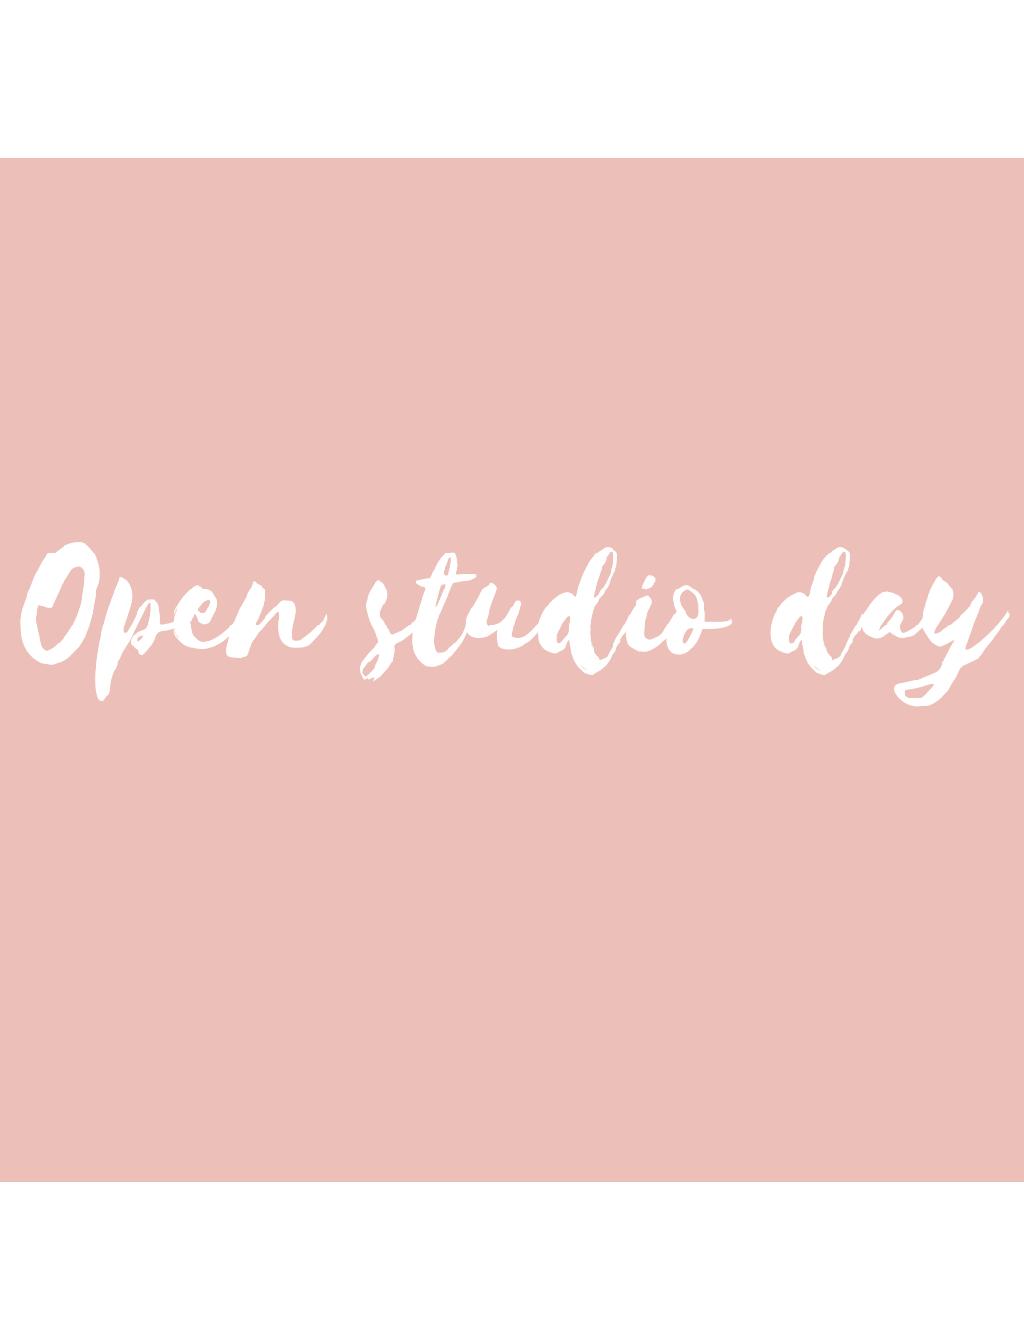 Open studio day 12:00-12:30